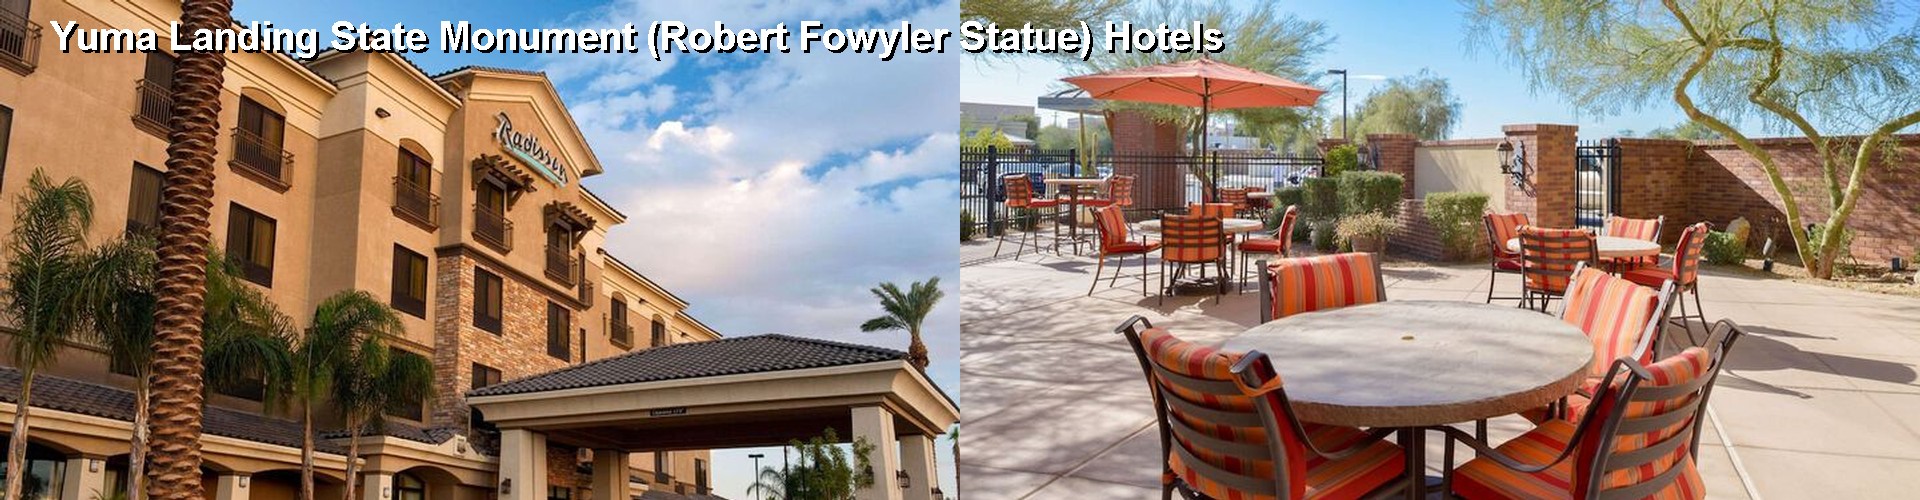 5 Best Hotels near Yuma Landing State Monument (Robert Fowyler Statue)